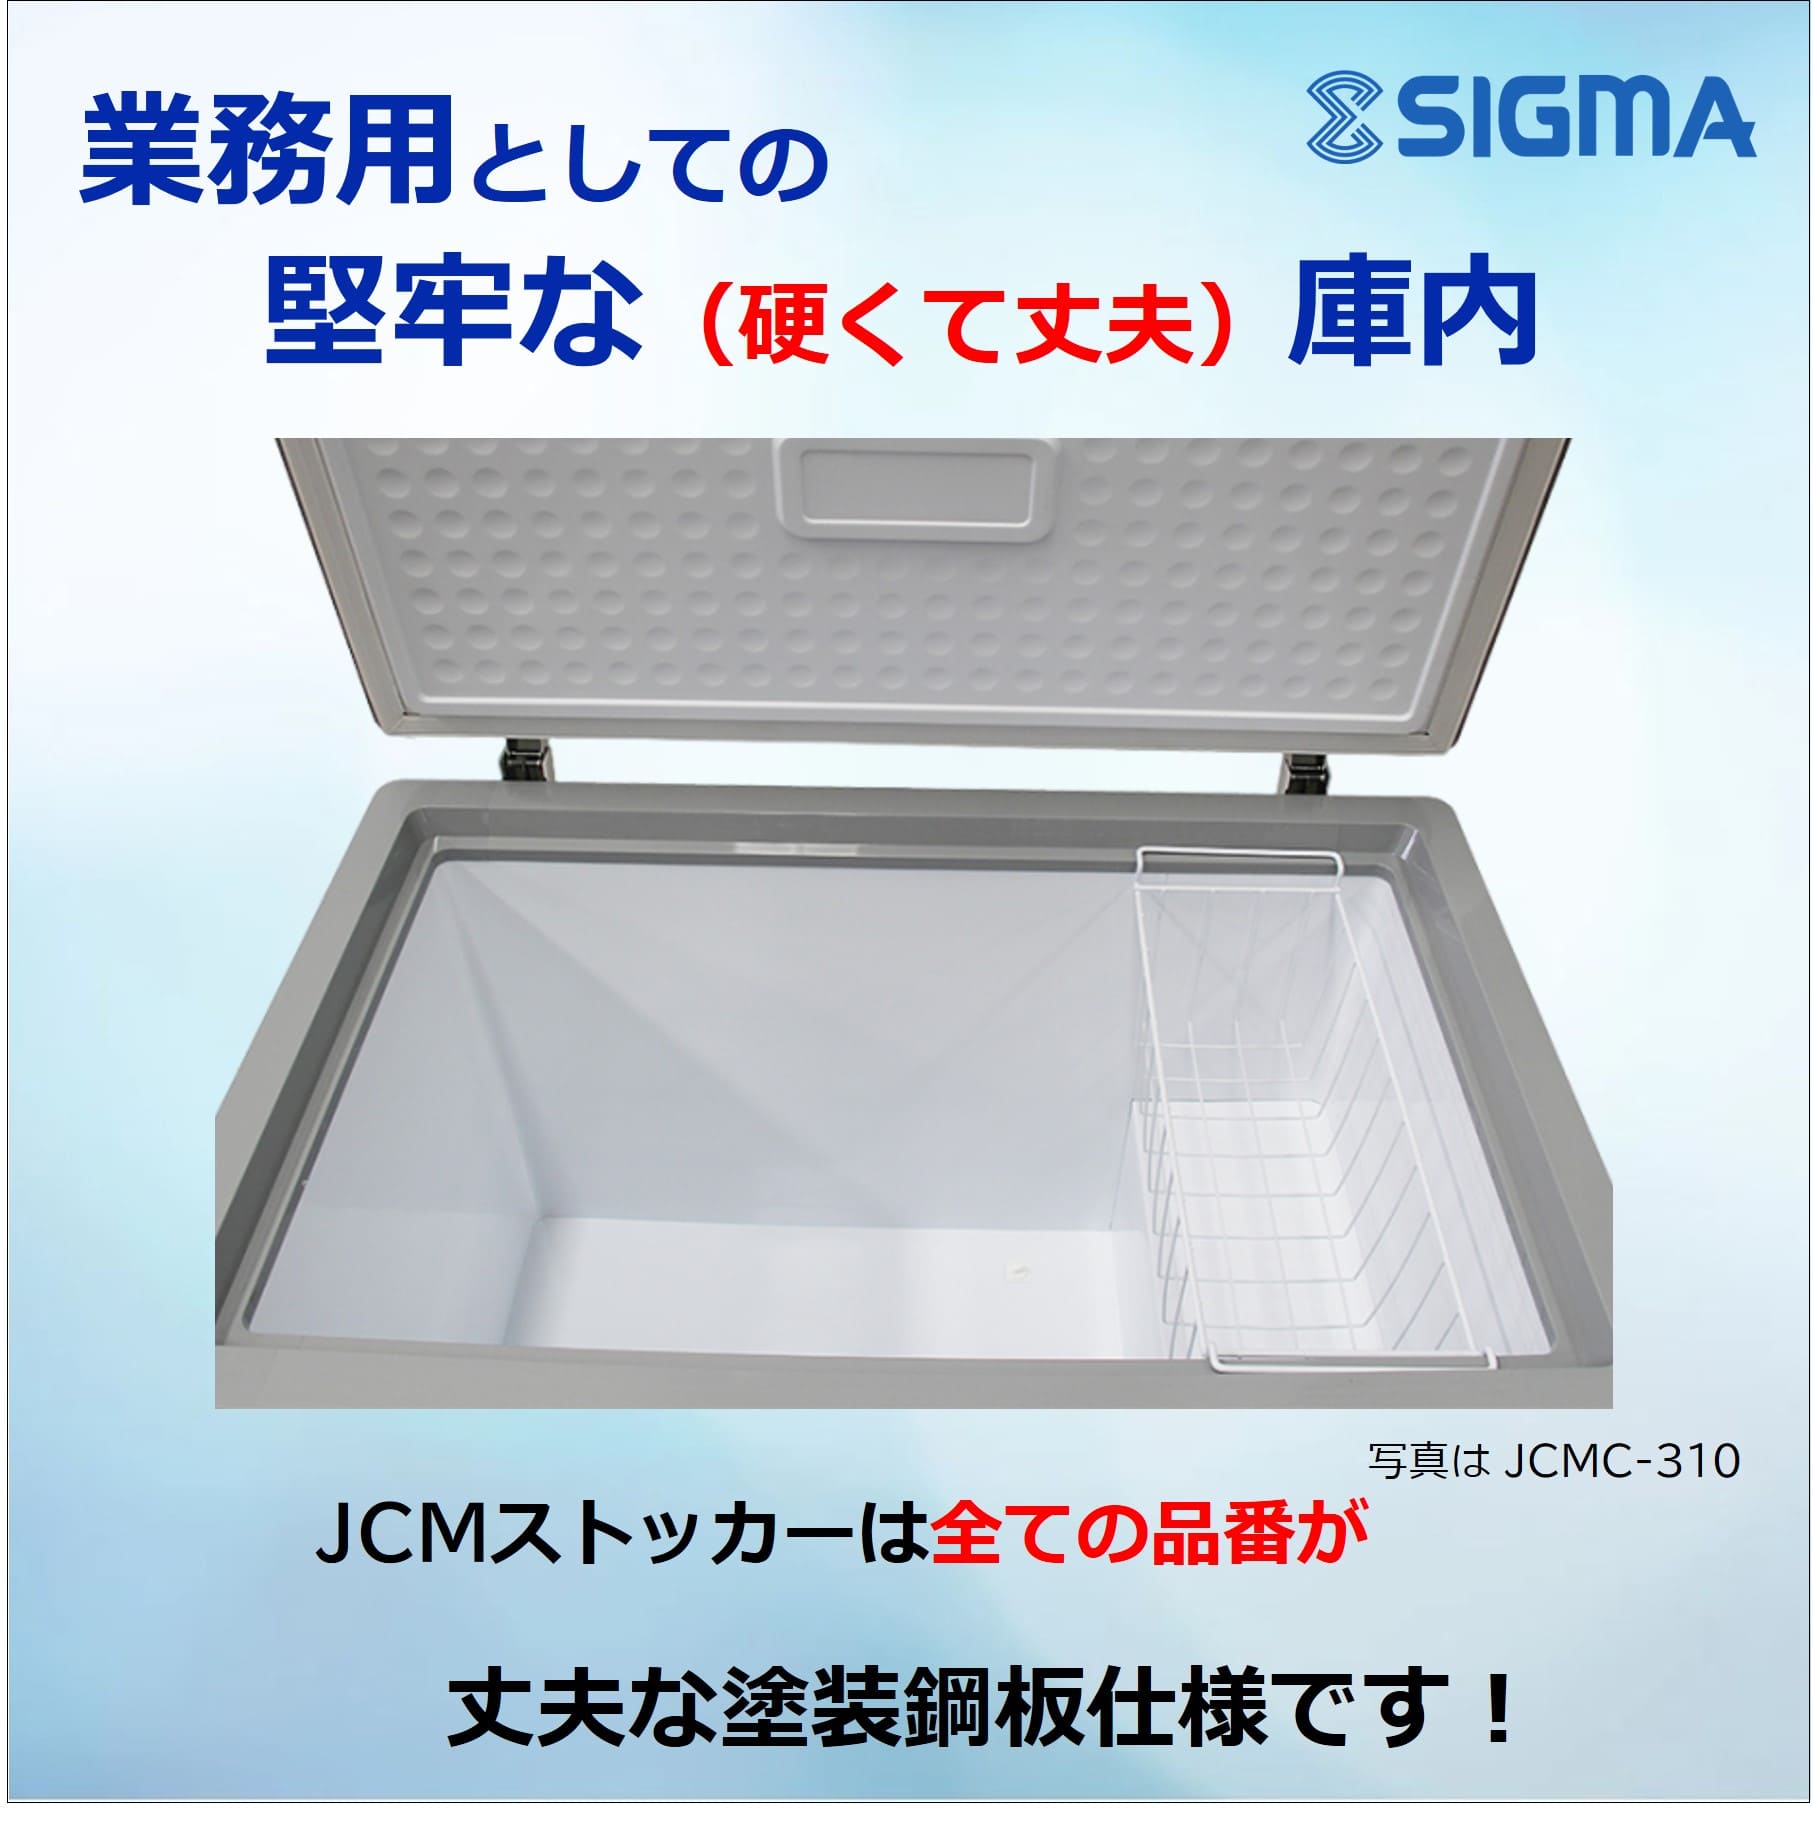 JCMC-41 冷凍ストッカー／幅489×奥行309×高さ859mm